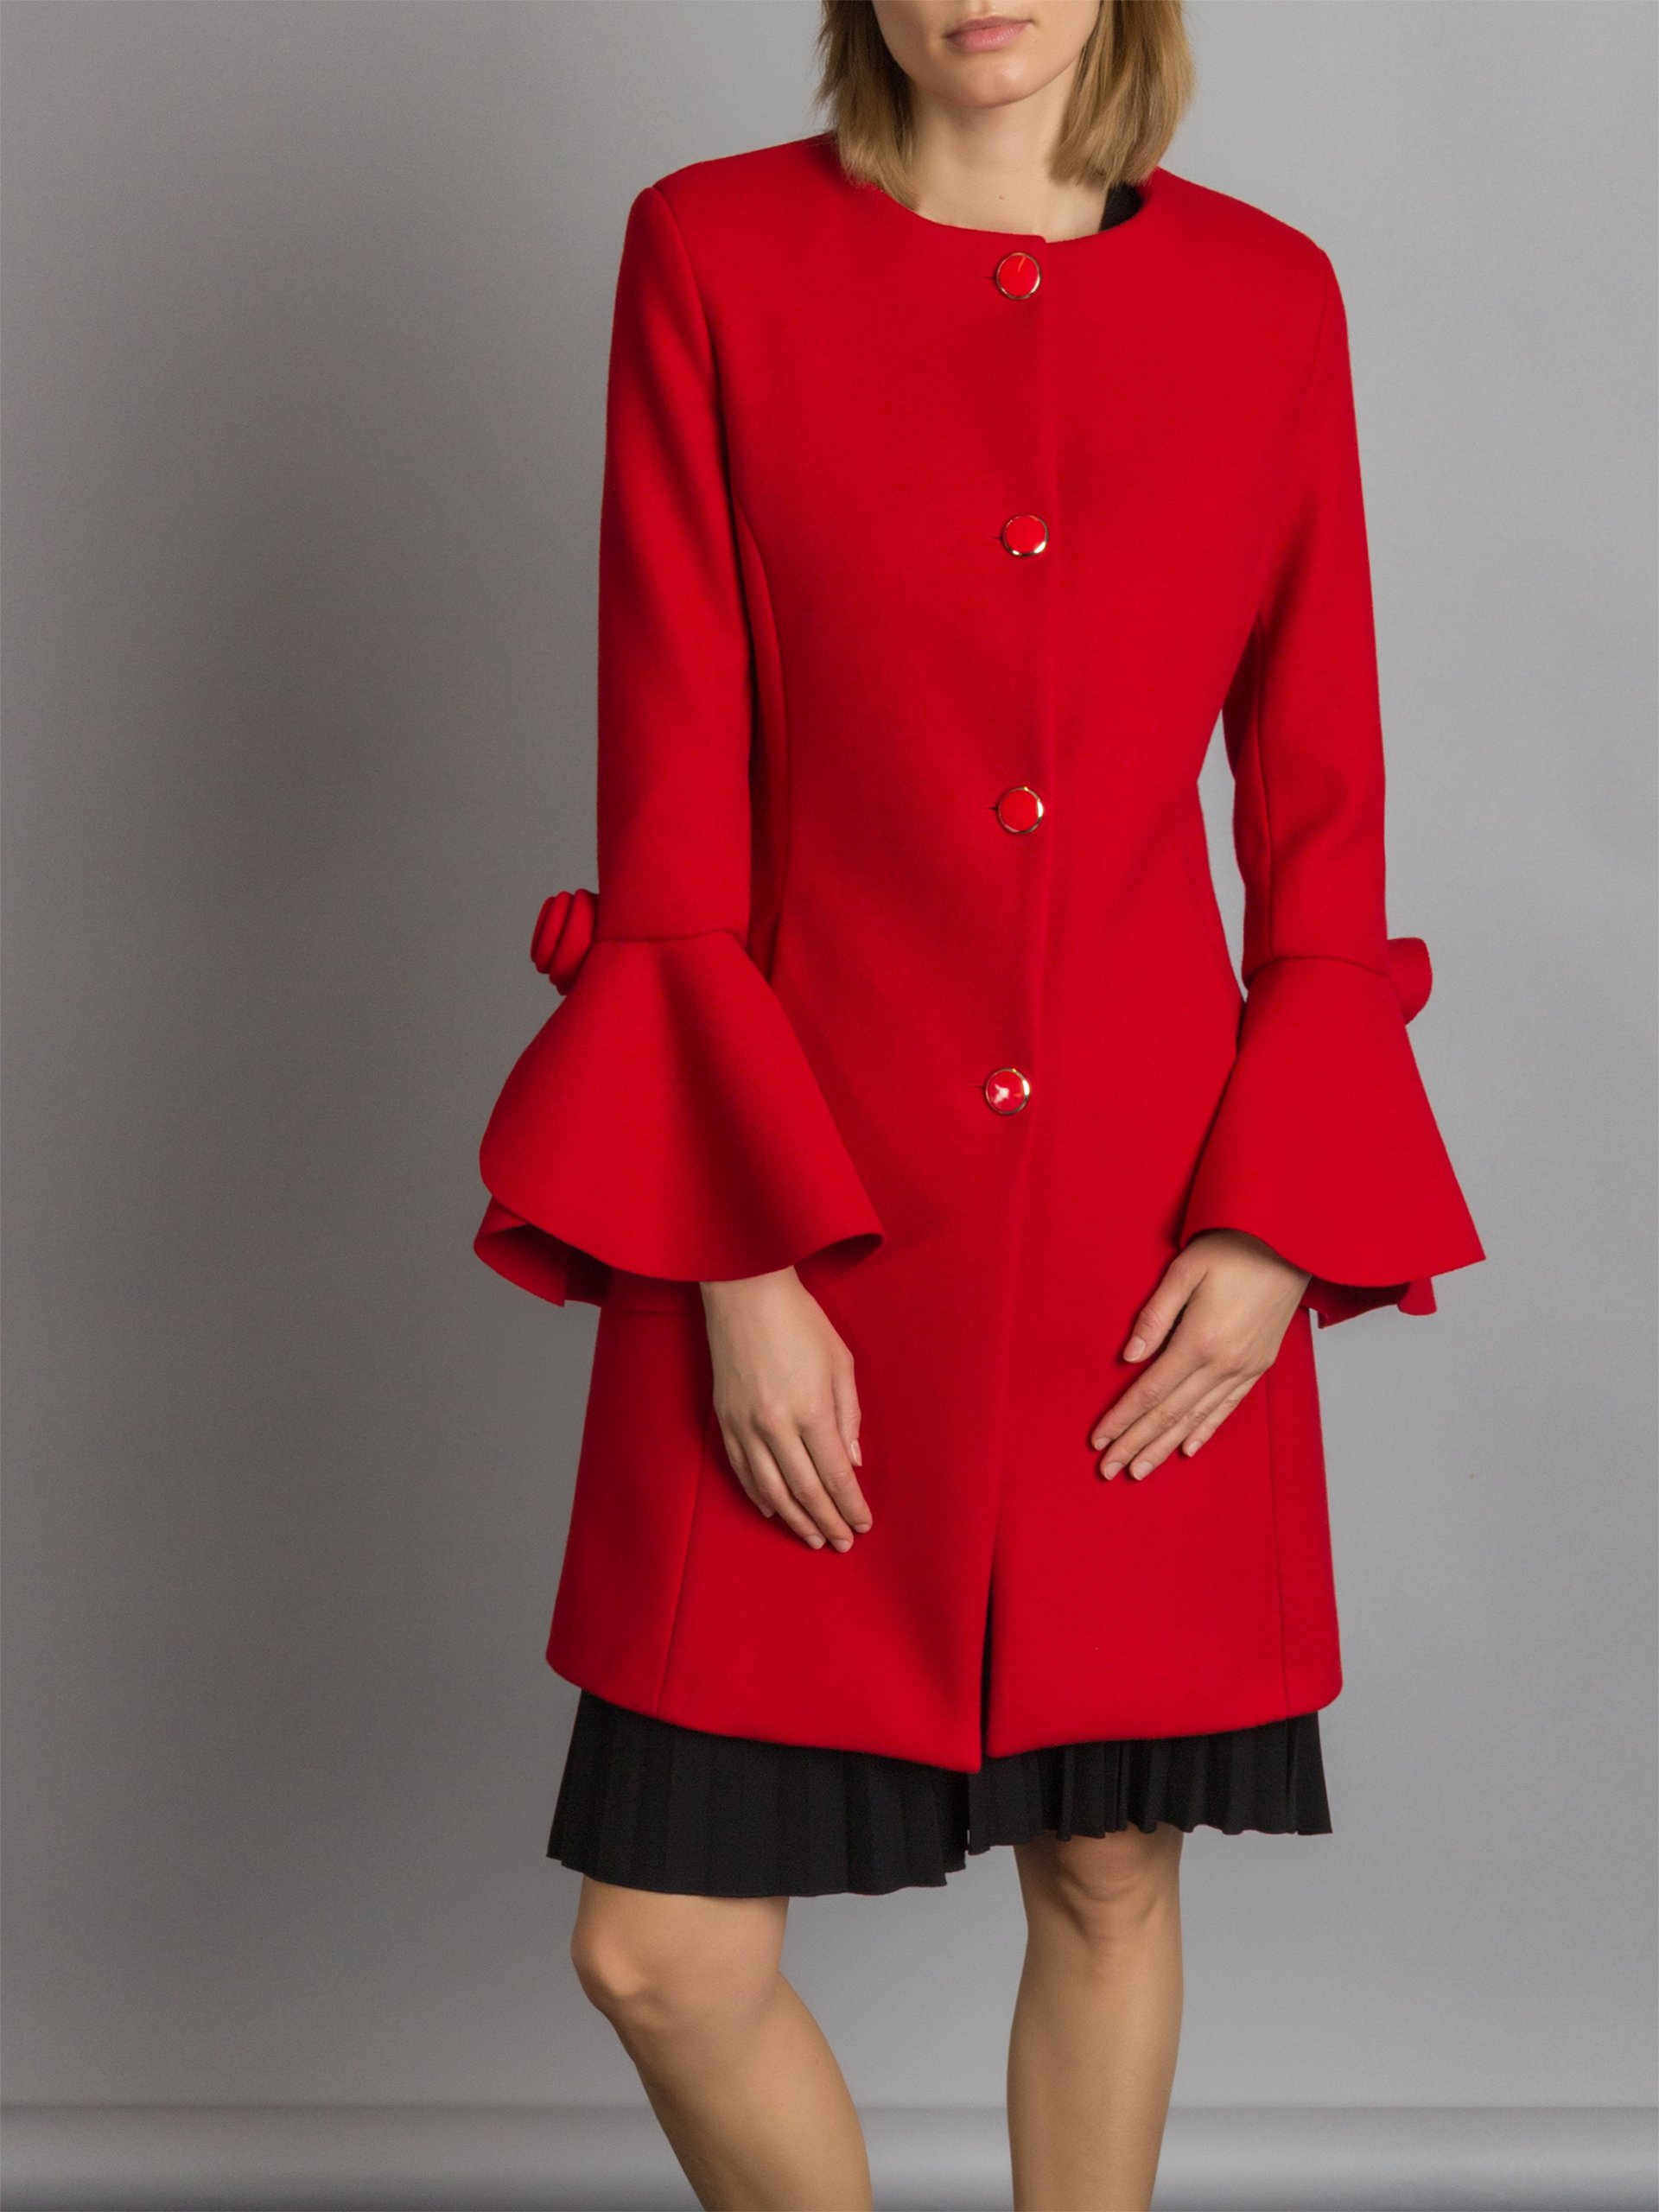 Cappotto elegante rosso Rinascimento a 139 euro